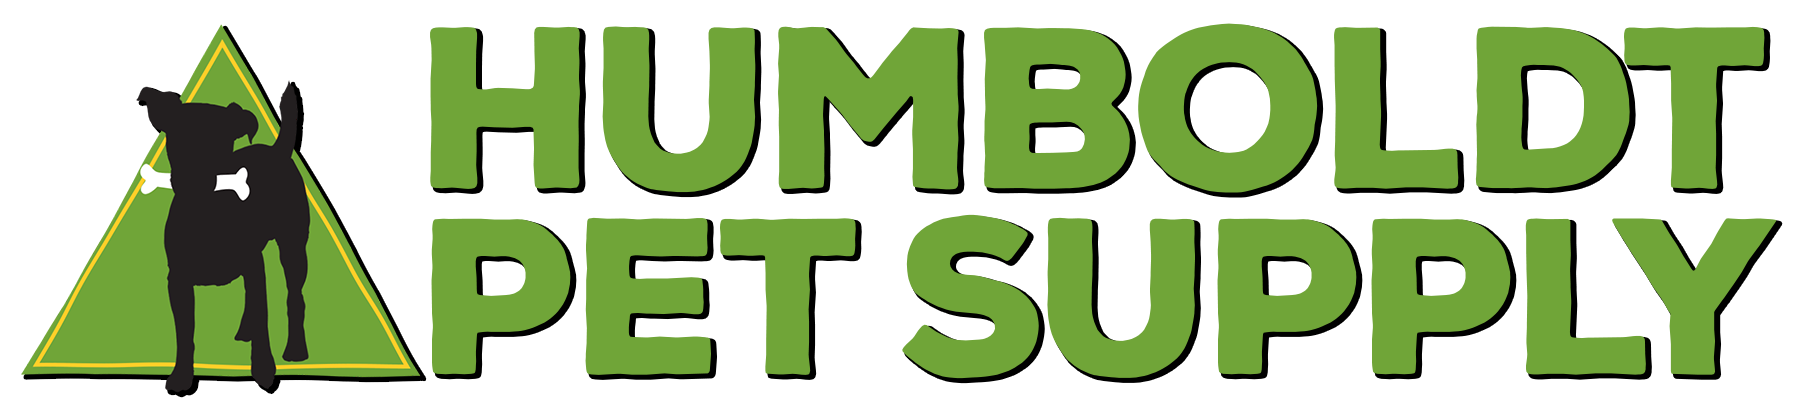 Humboldt Pet Supply (Copy)